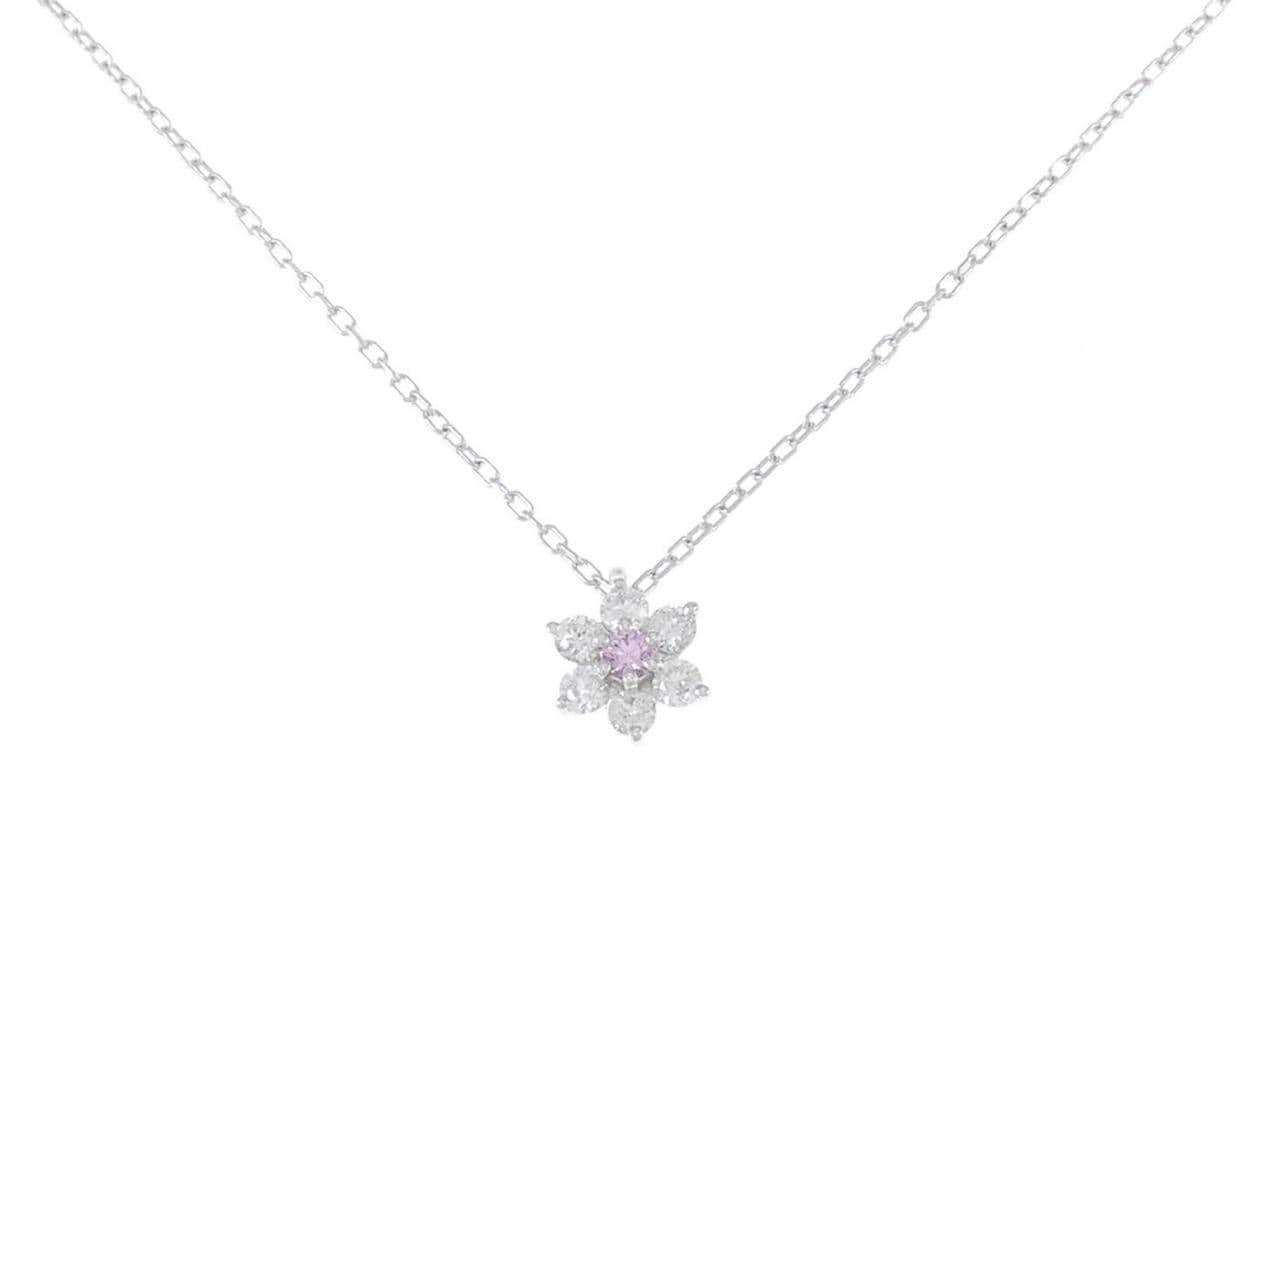 K18WG flower sapphire necklace